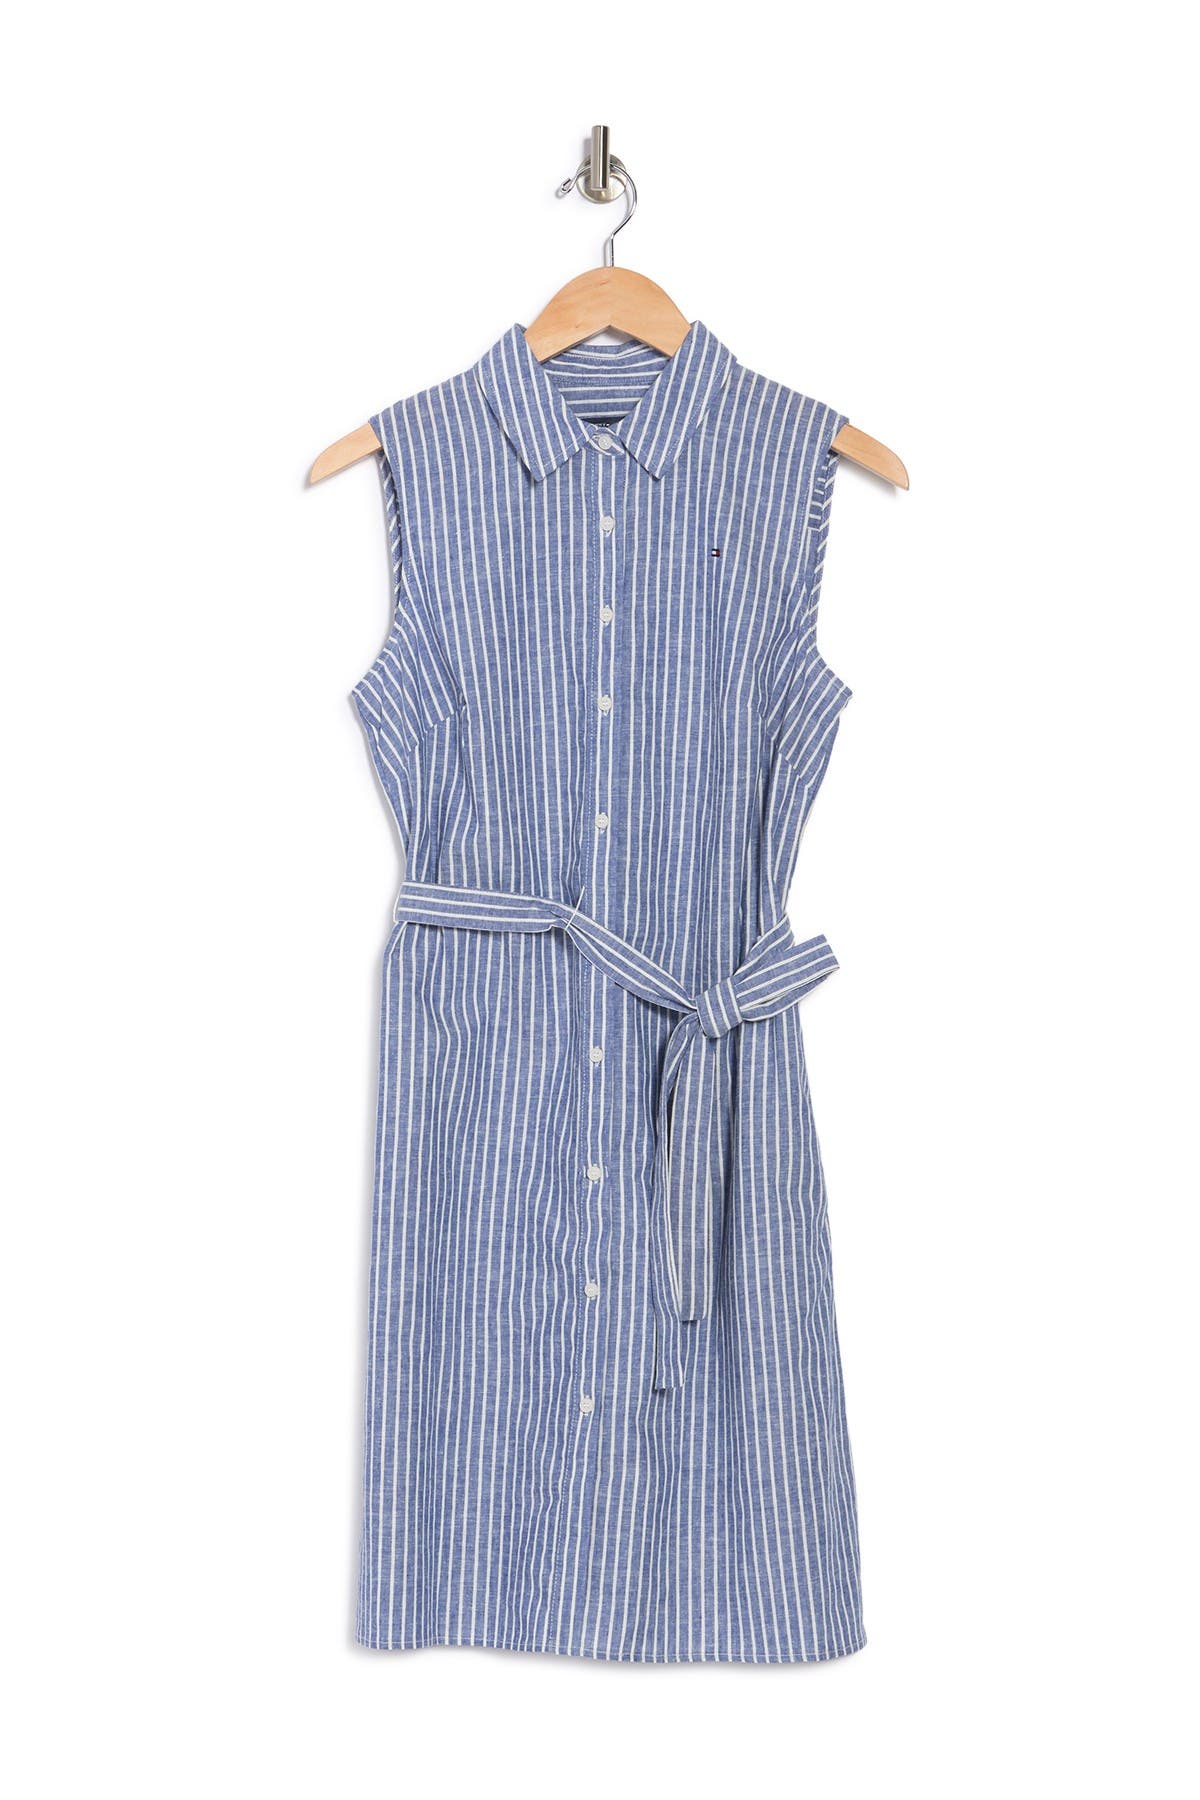 Tommy Hilfiger Narrow Stripe Shirt Dress In Blue/brt W